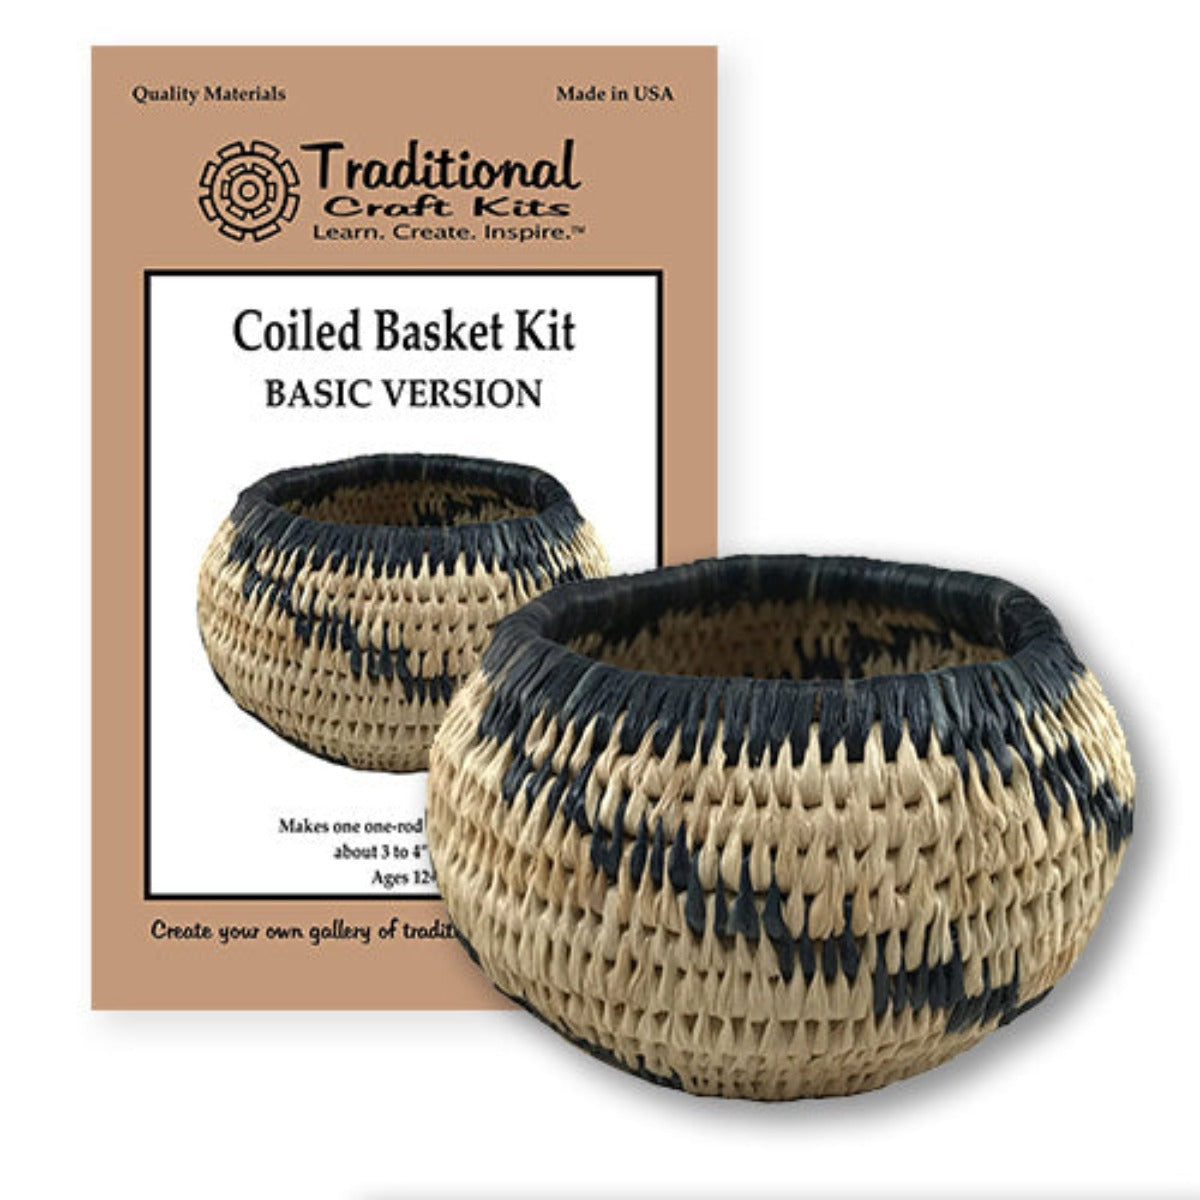 Traditional Craft Kits Prehistoric Pottery Kit - 20485359